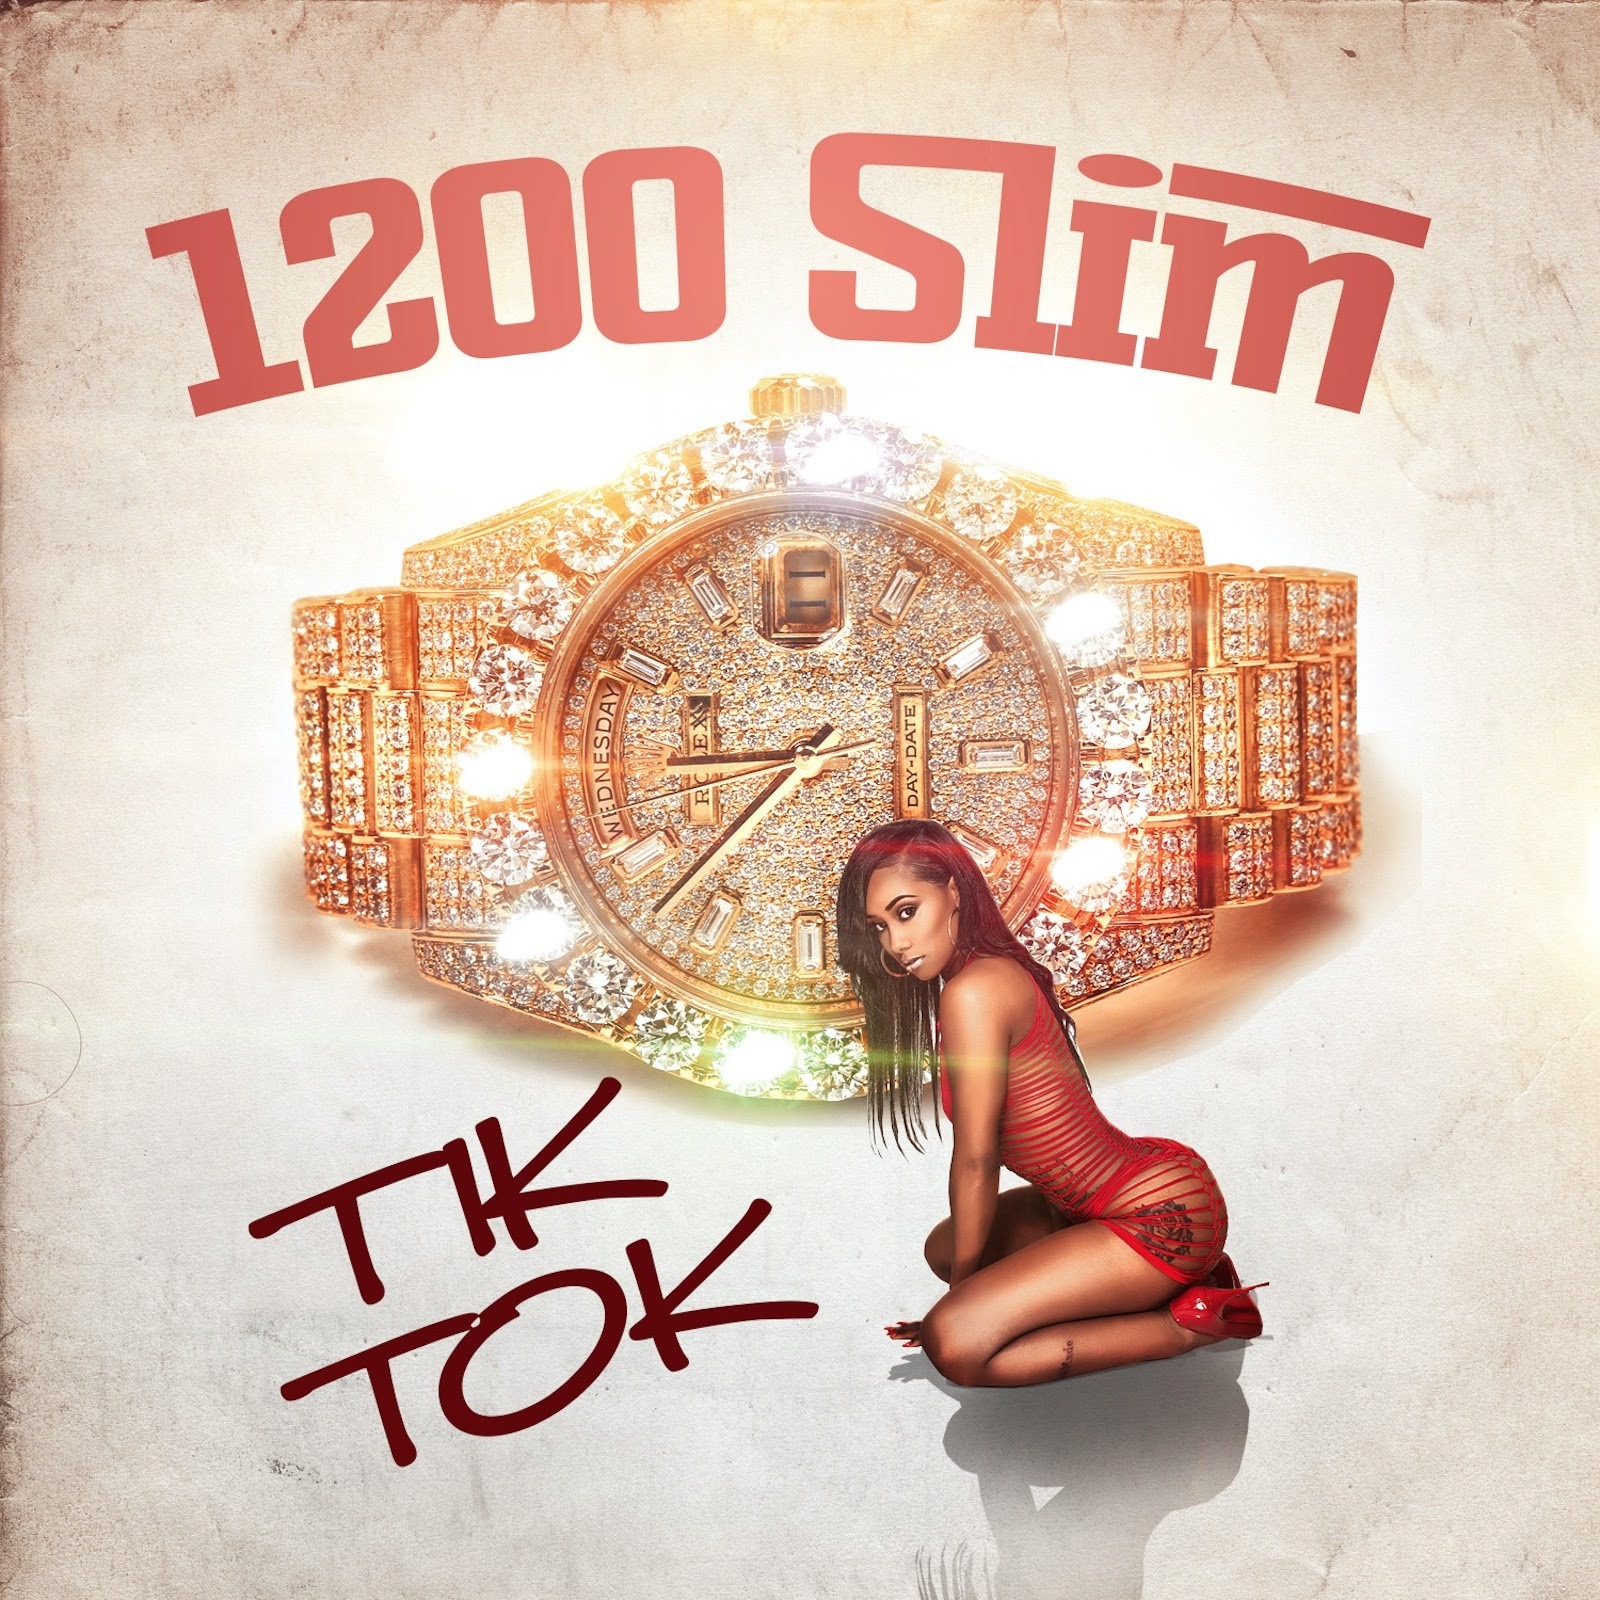 Slim 1200 Takes Control Over His Destiny And Drops “Tik Tok”